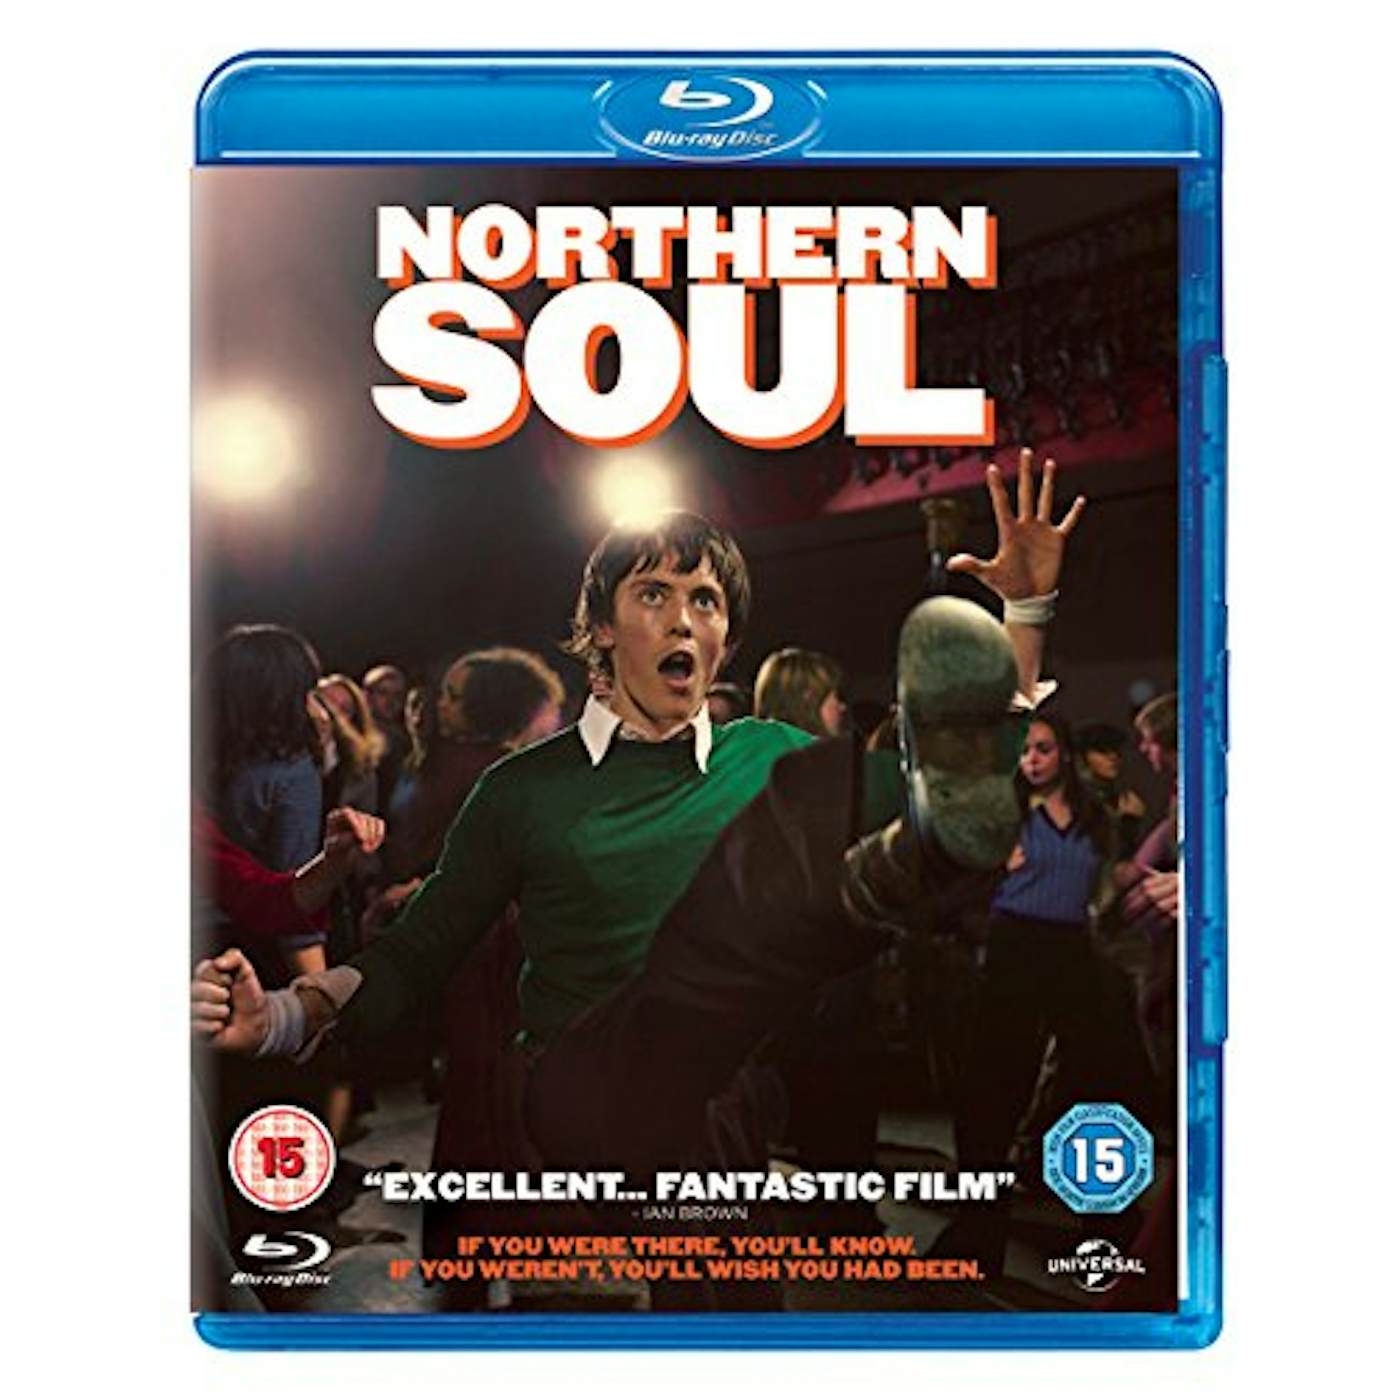 NORTHERN SOUL / VARIOUS Blu-ray